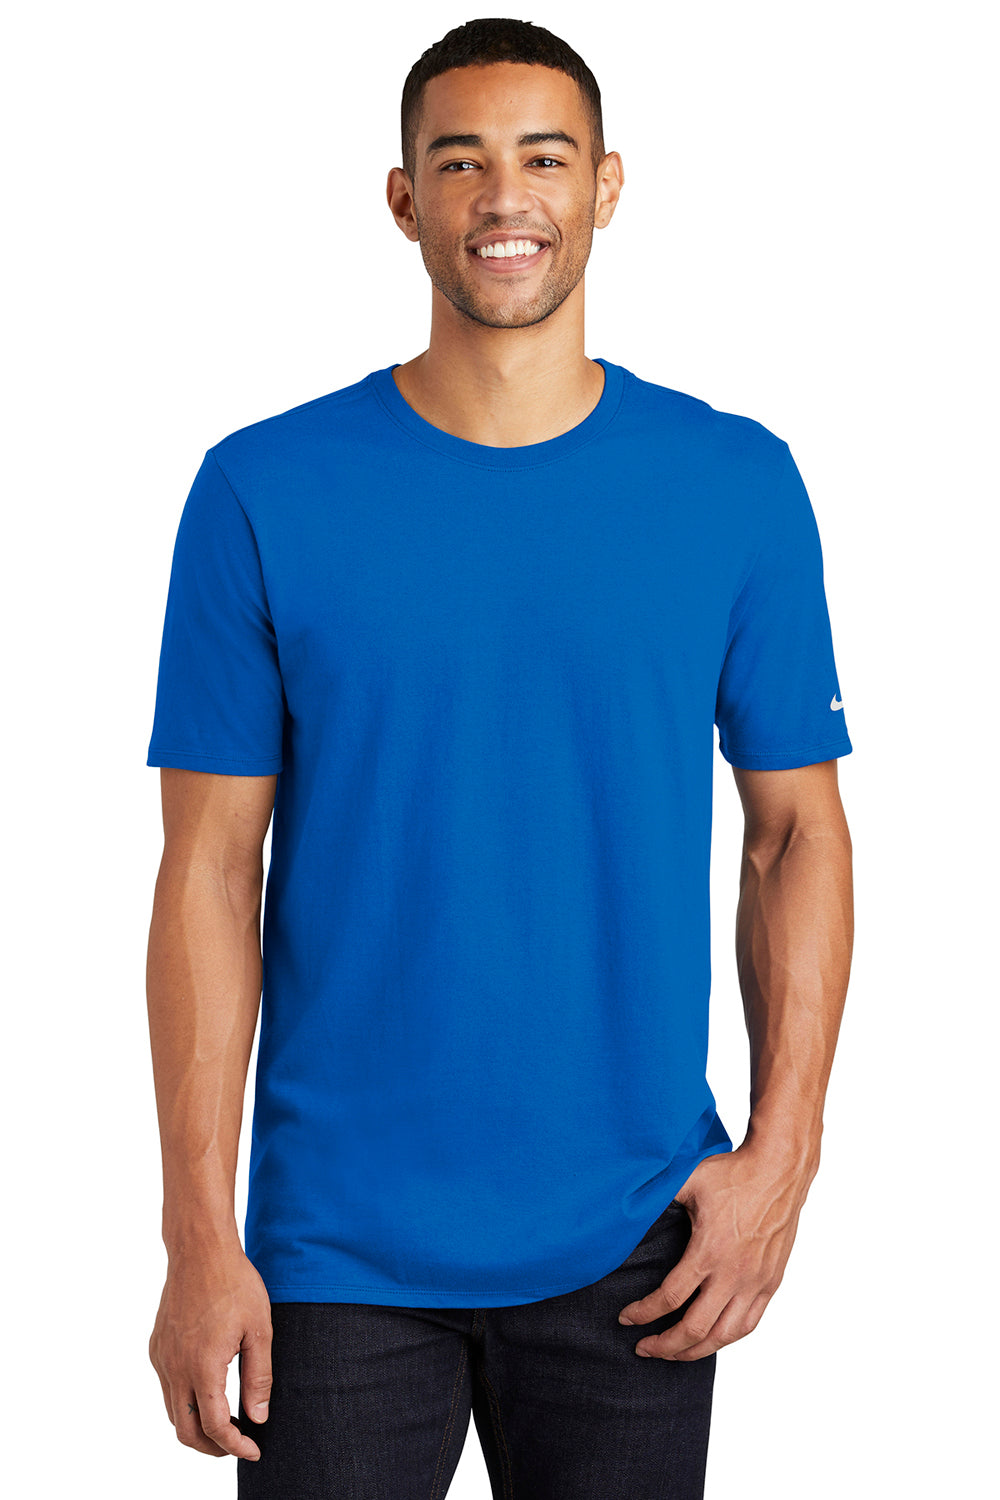 Nike NKBQ5233 Mens Core Short Sleeve Crewneck T-Shirt Royal Blue Front